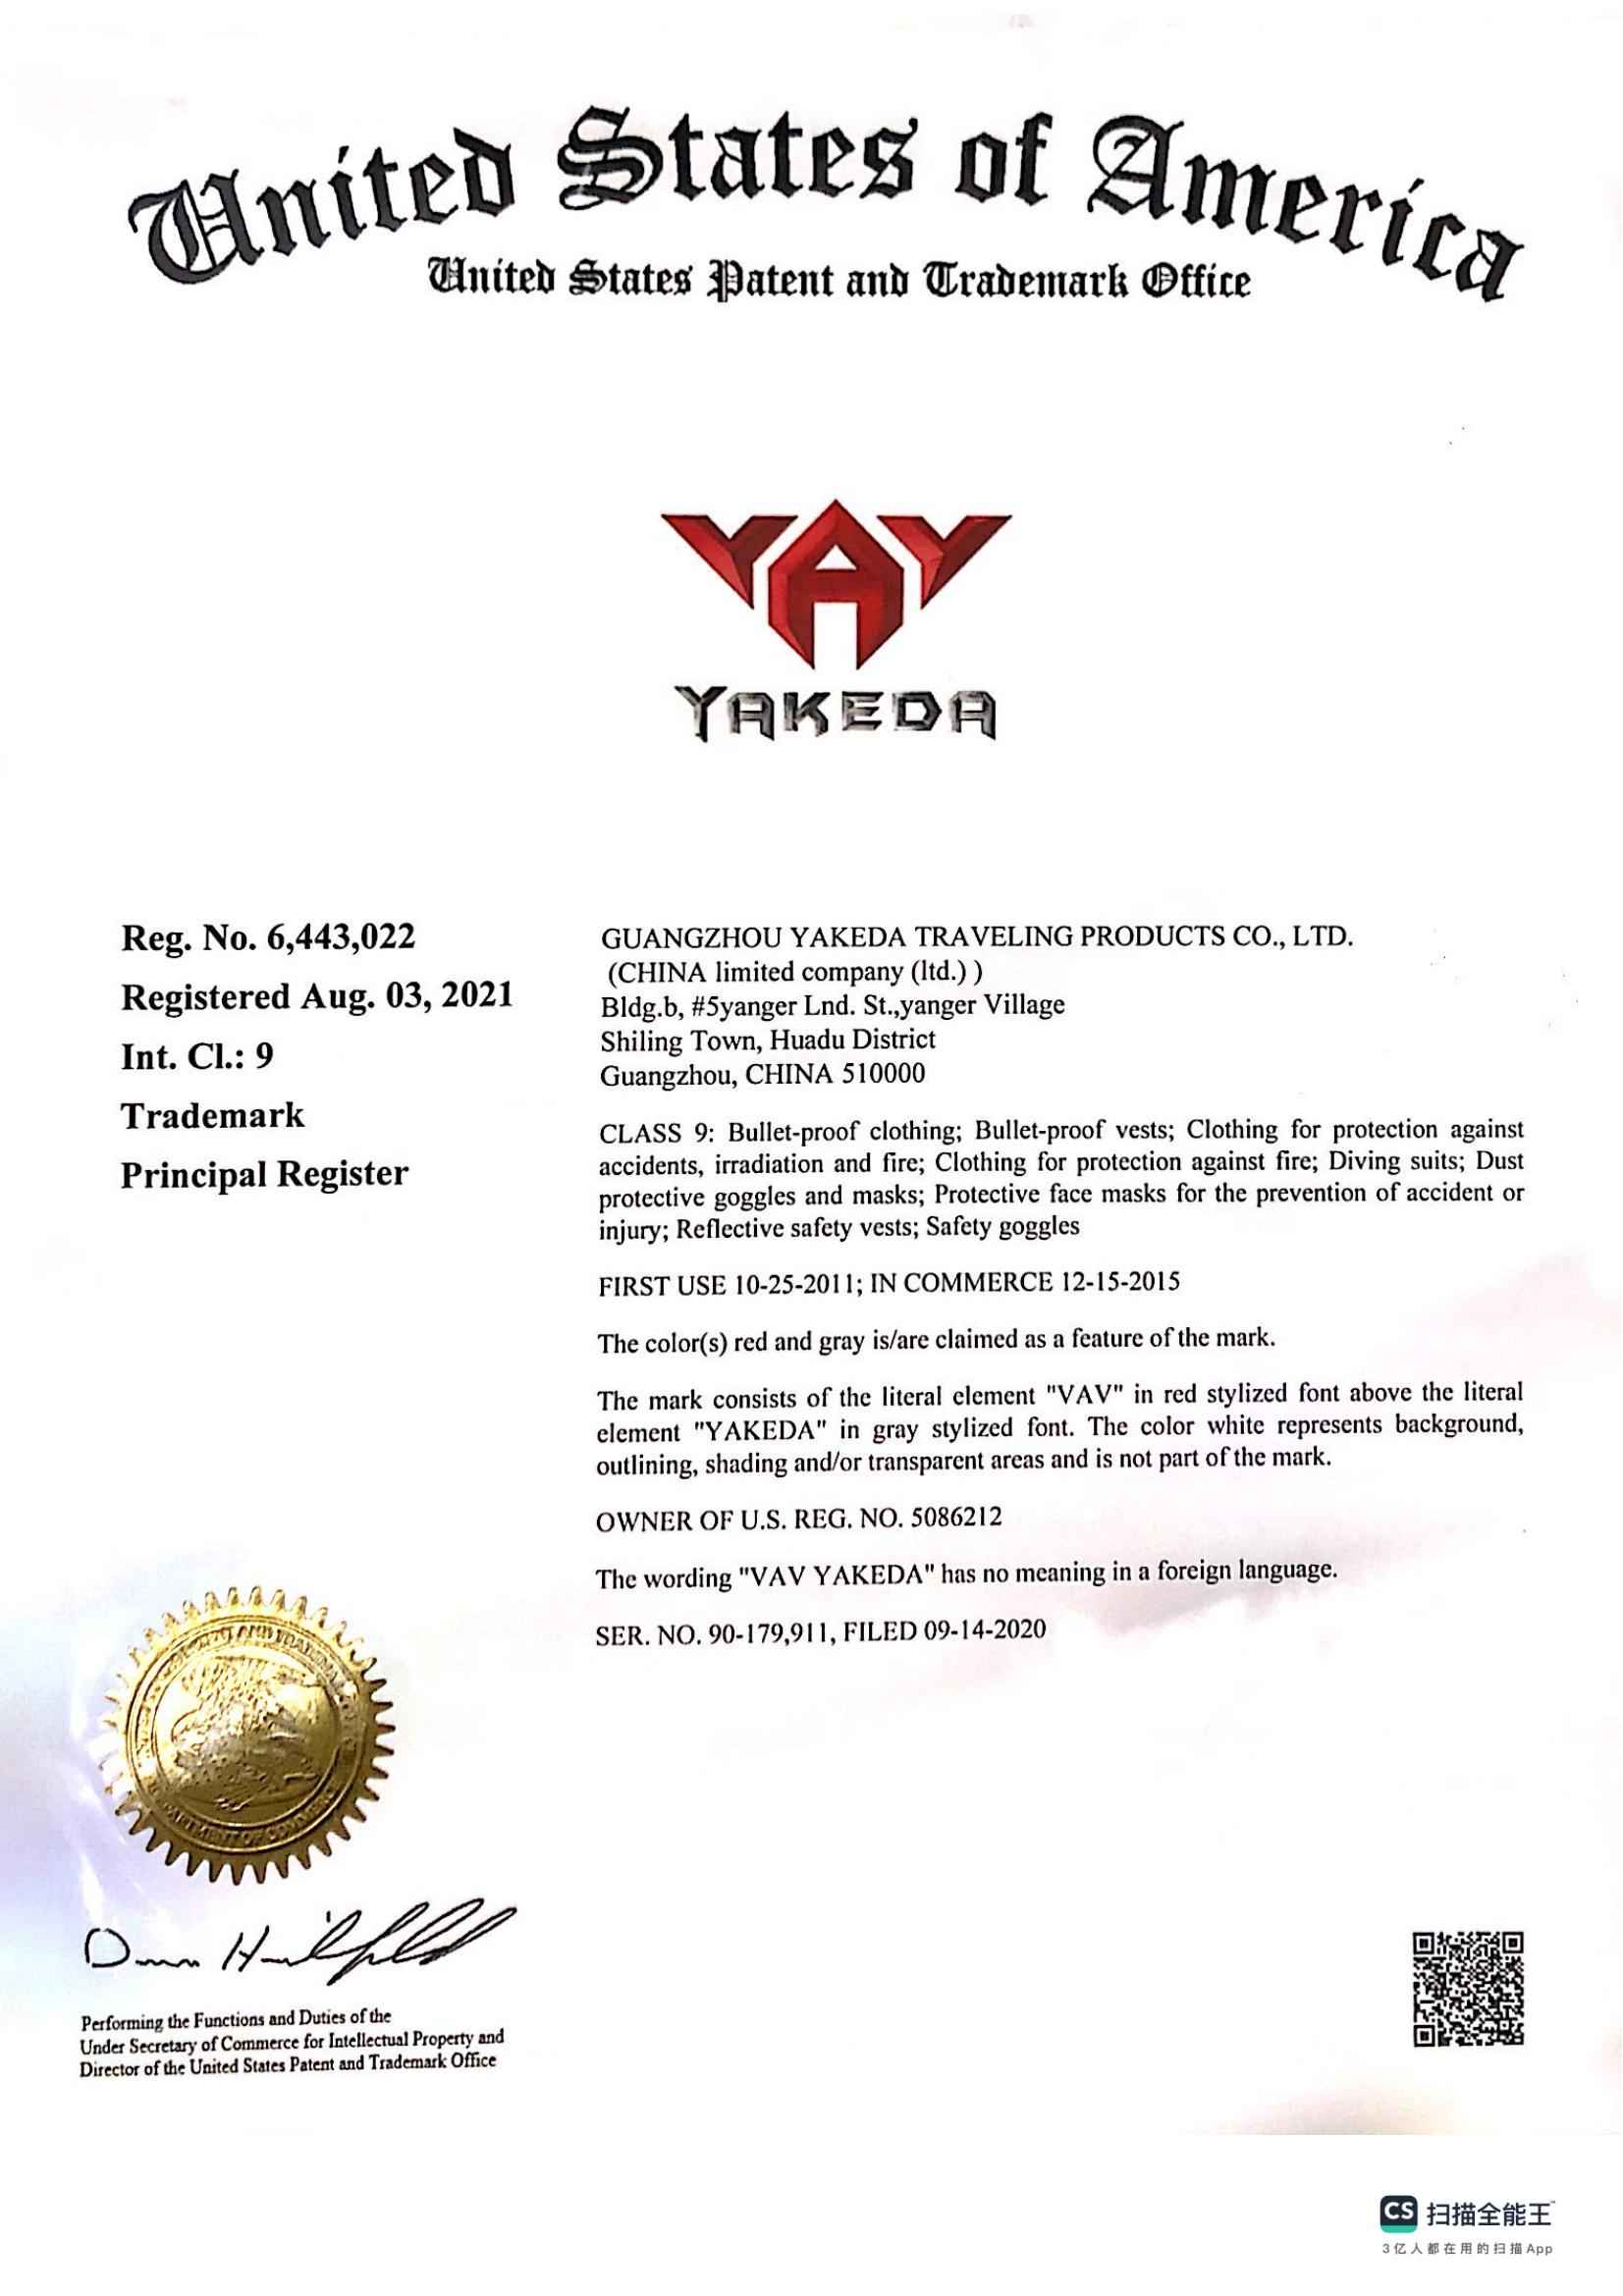 United States Trademark Certificate